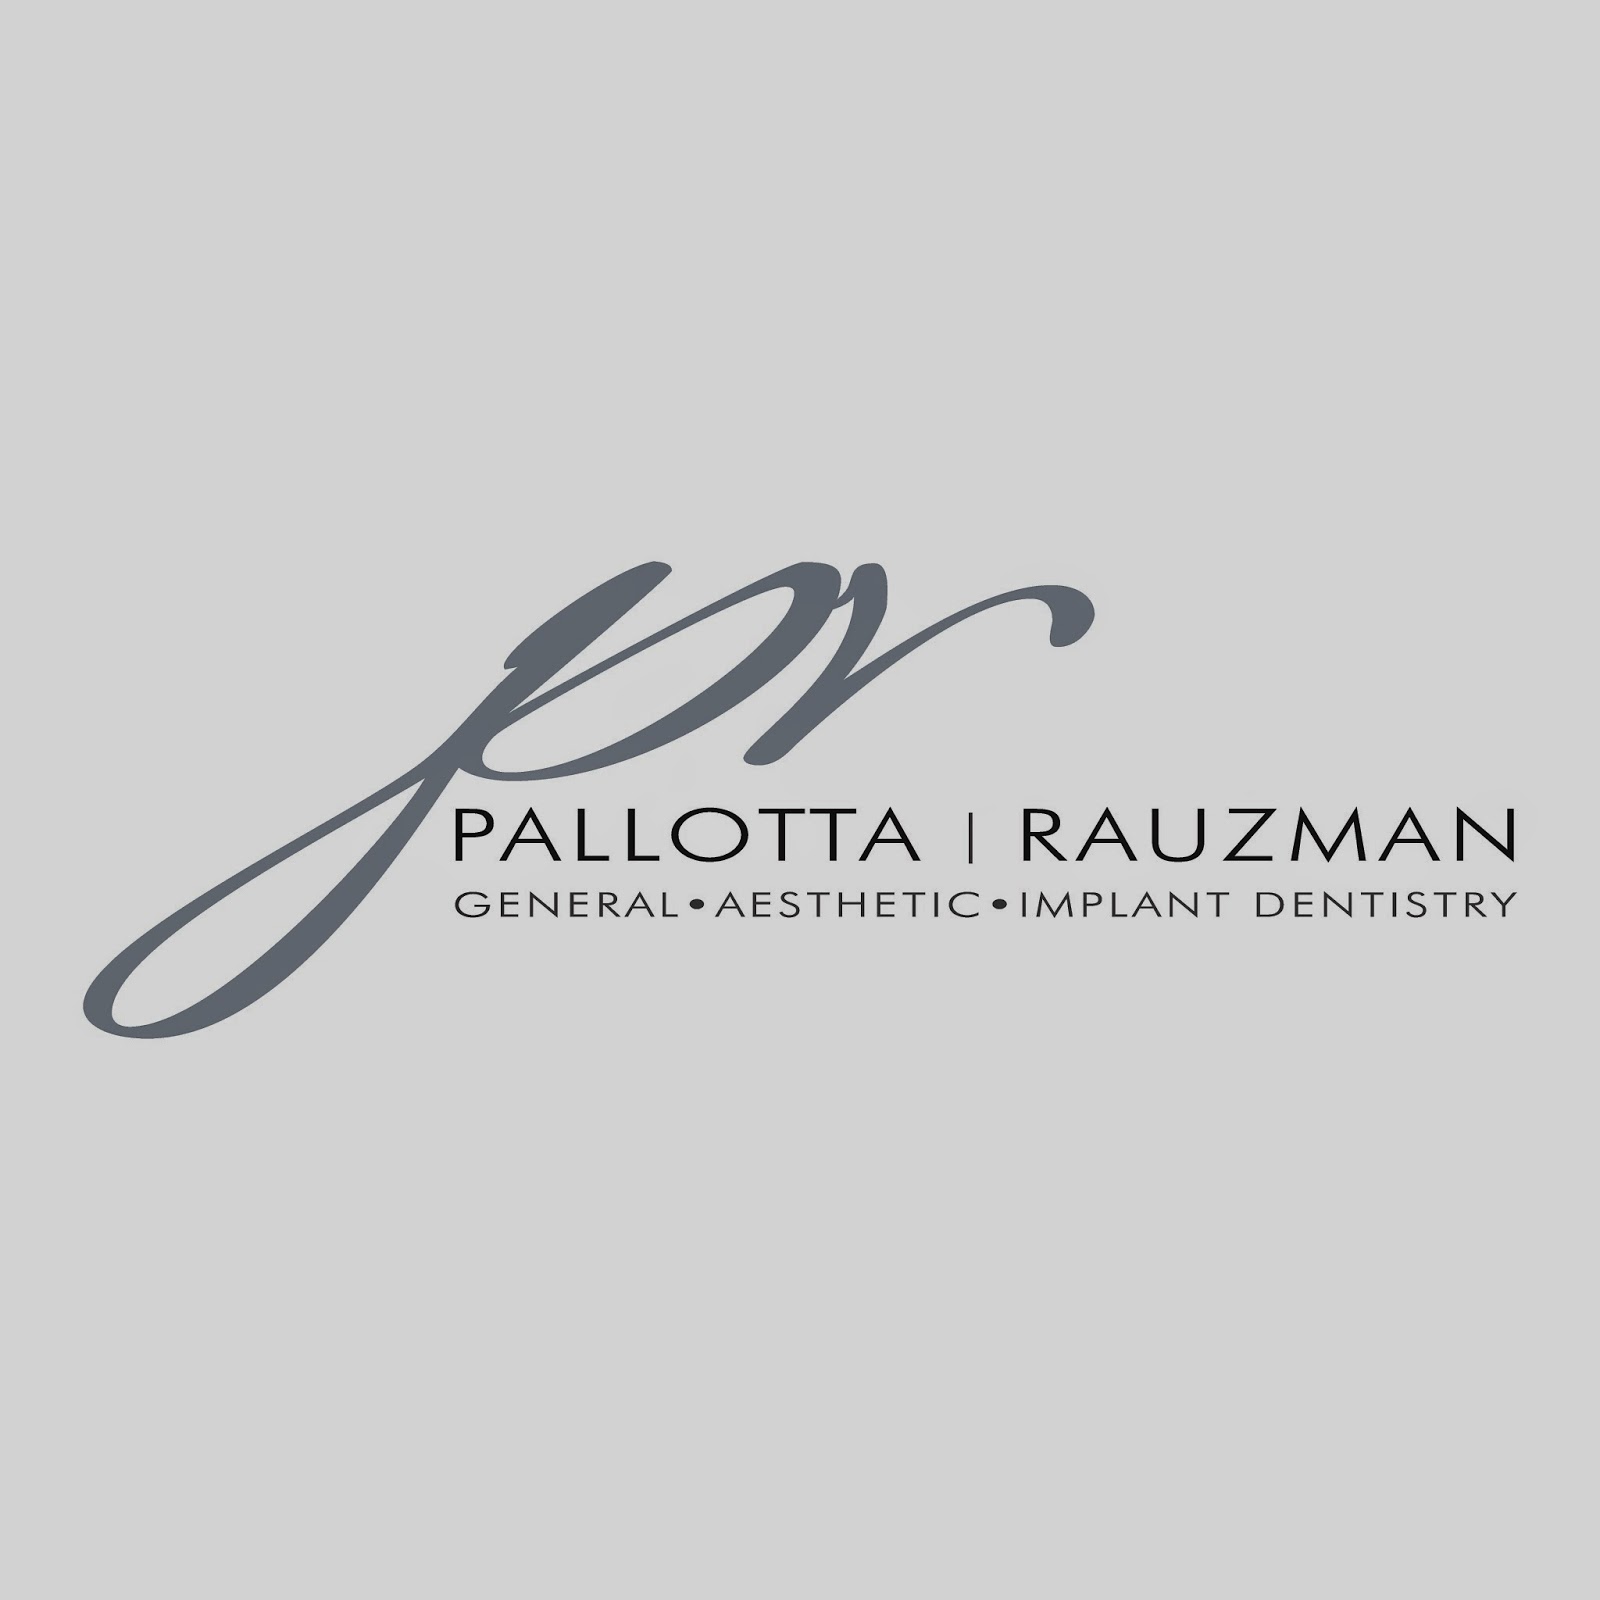 Photo of Pallotta Rauzman in Hawthorne City, New Jersey, United States - 2 Picture of Point of interest, Establishment, Health, Dentist